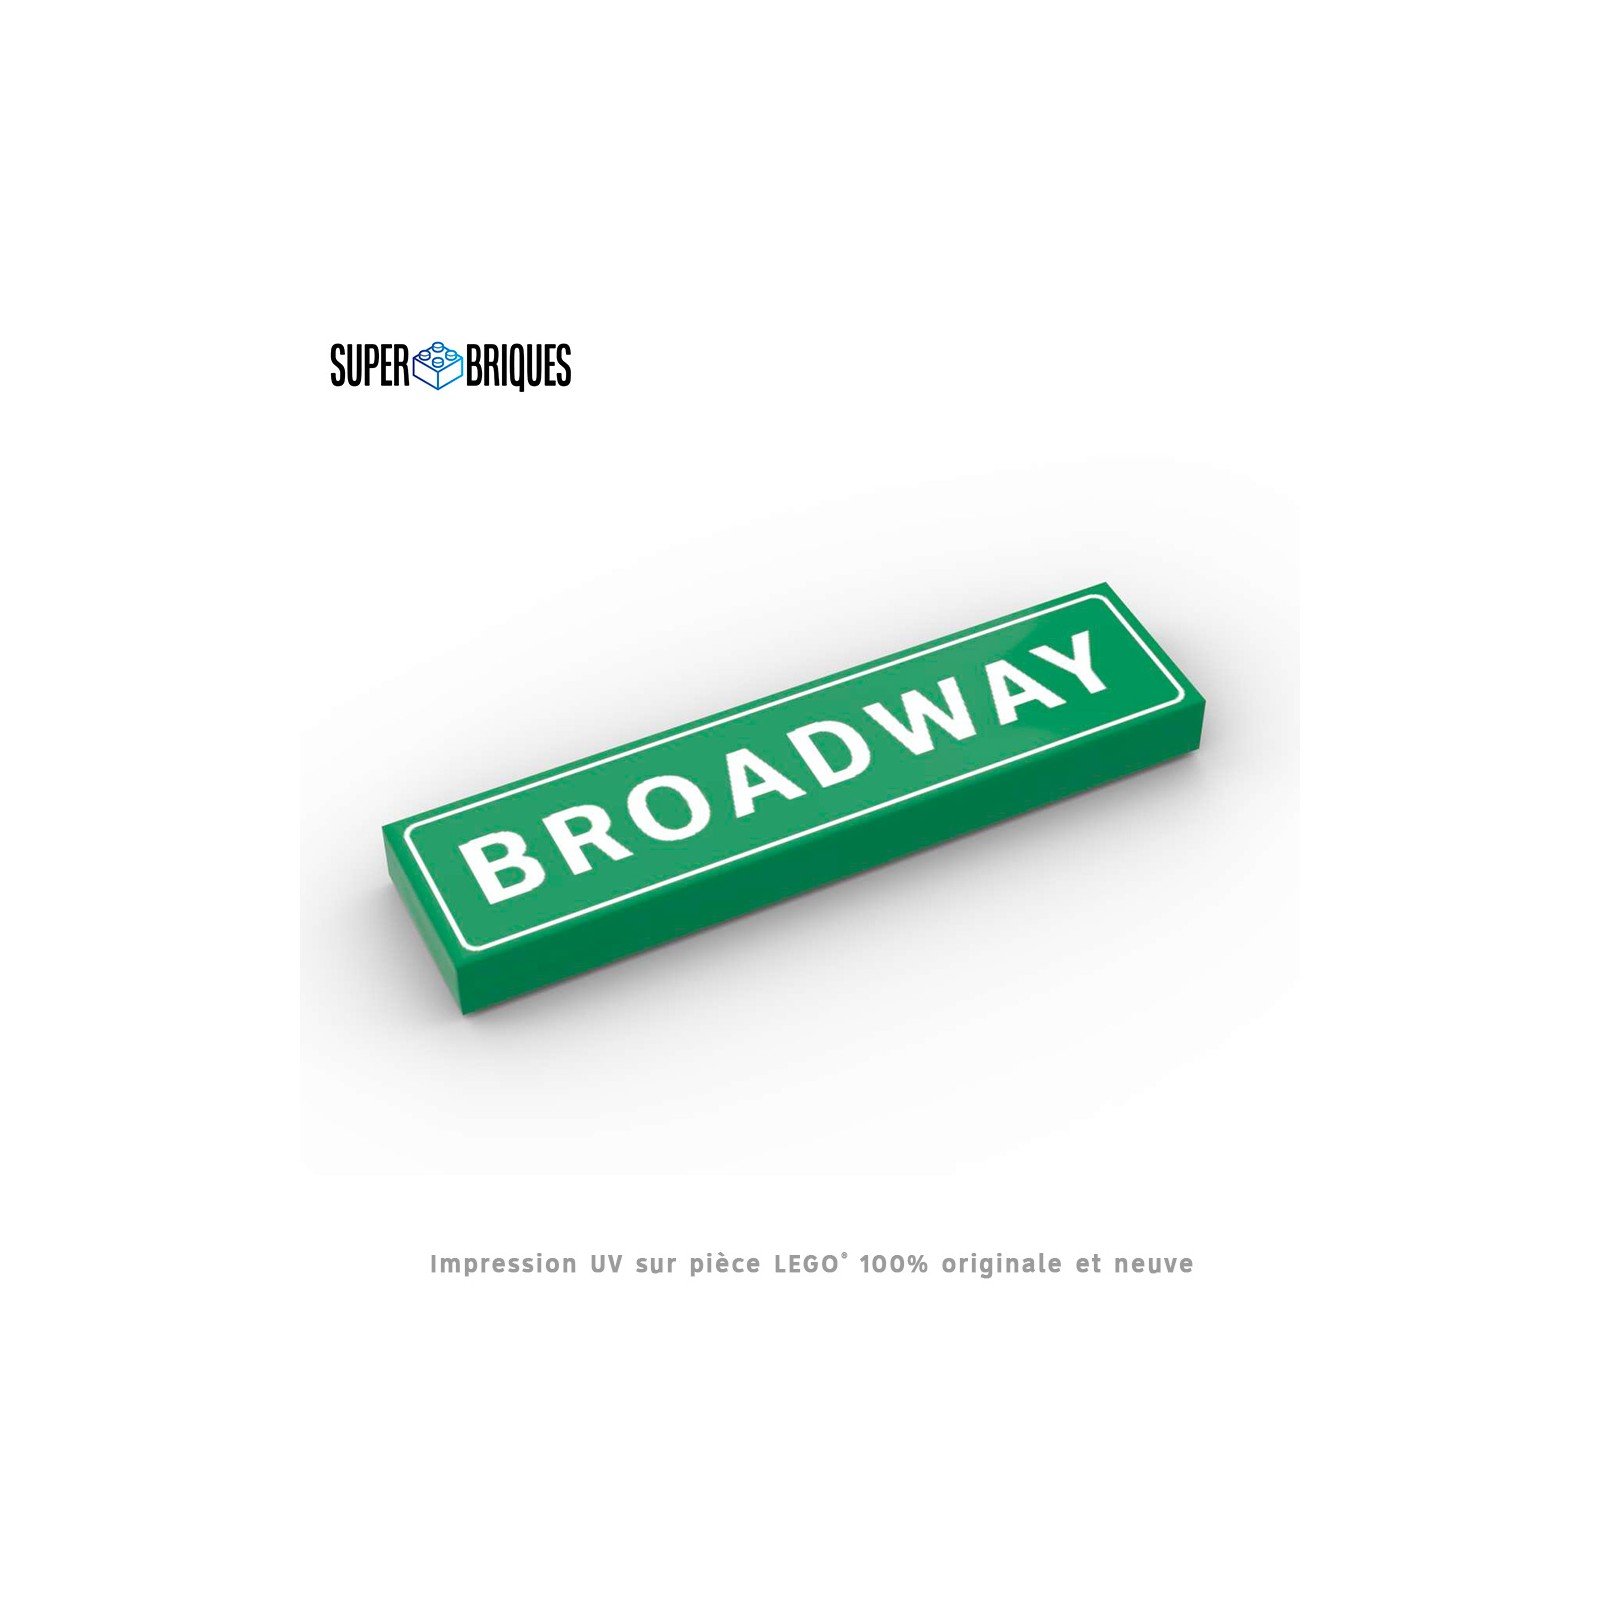 Panneau de rue New York "Broadway" - Pièce LEGO® customisée